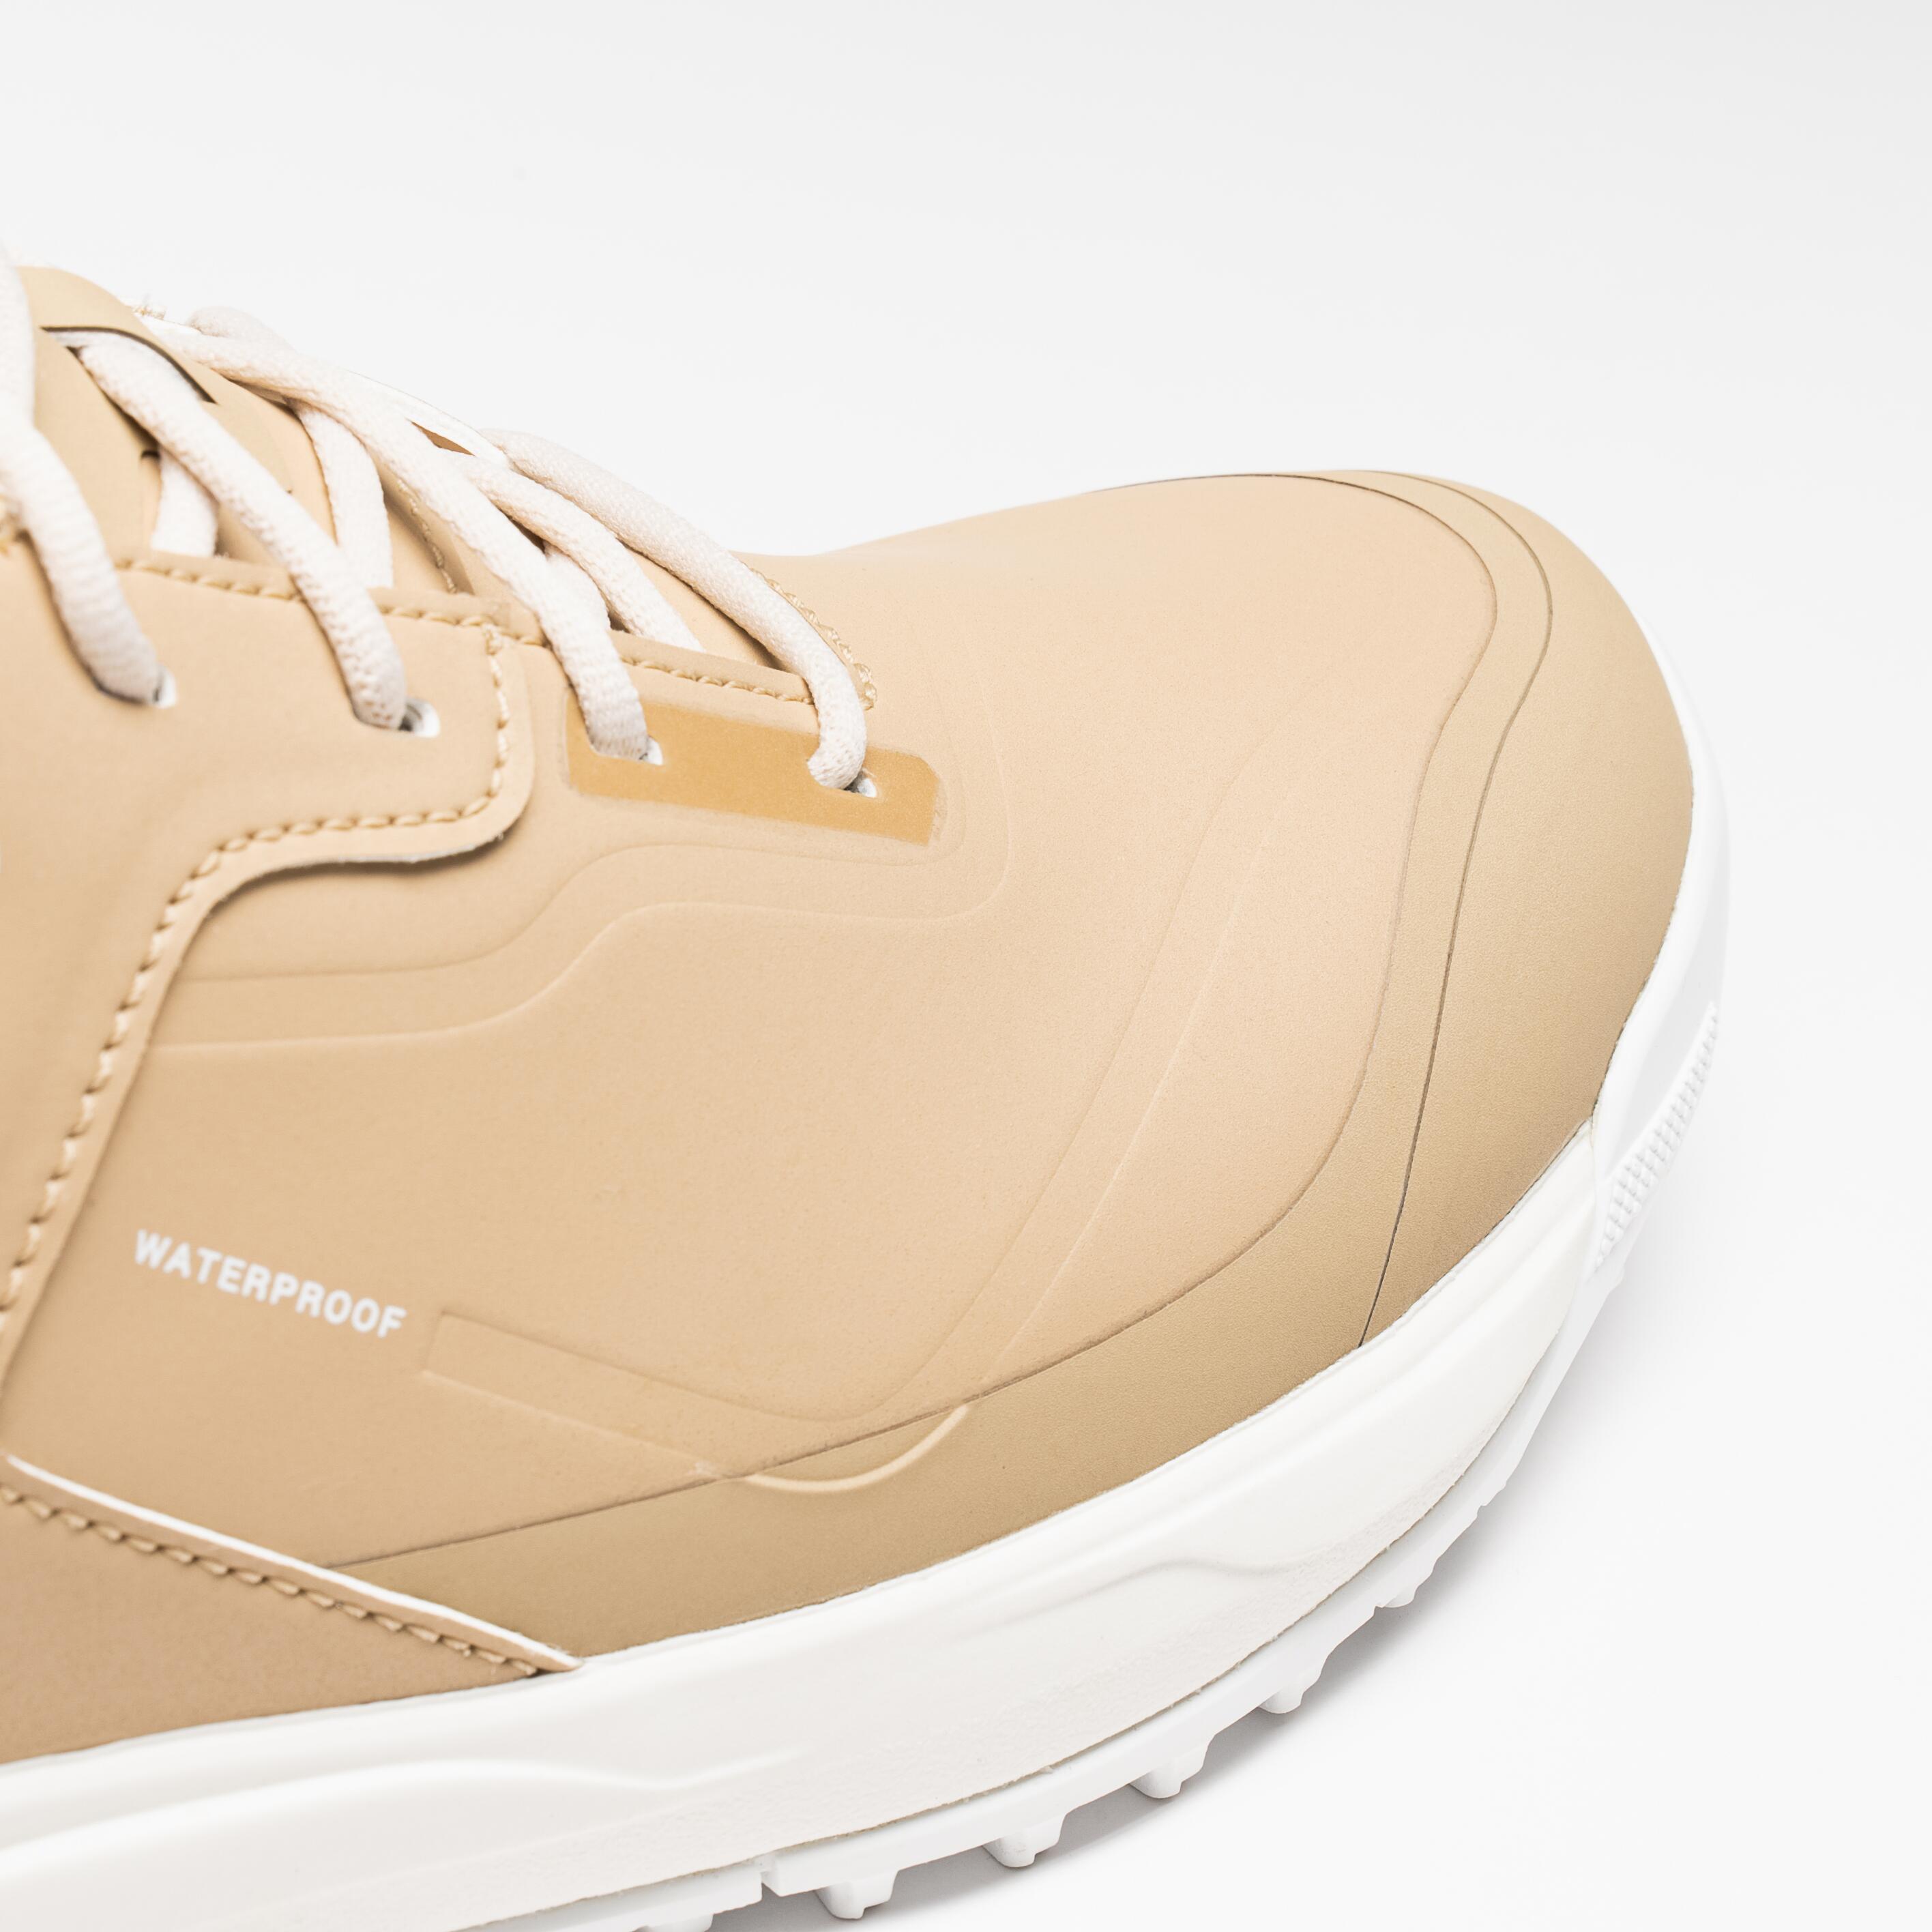 Men's Waterproof Golf Shoes - MW 500 Beige 7/7